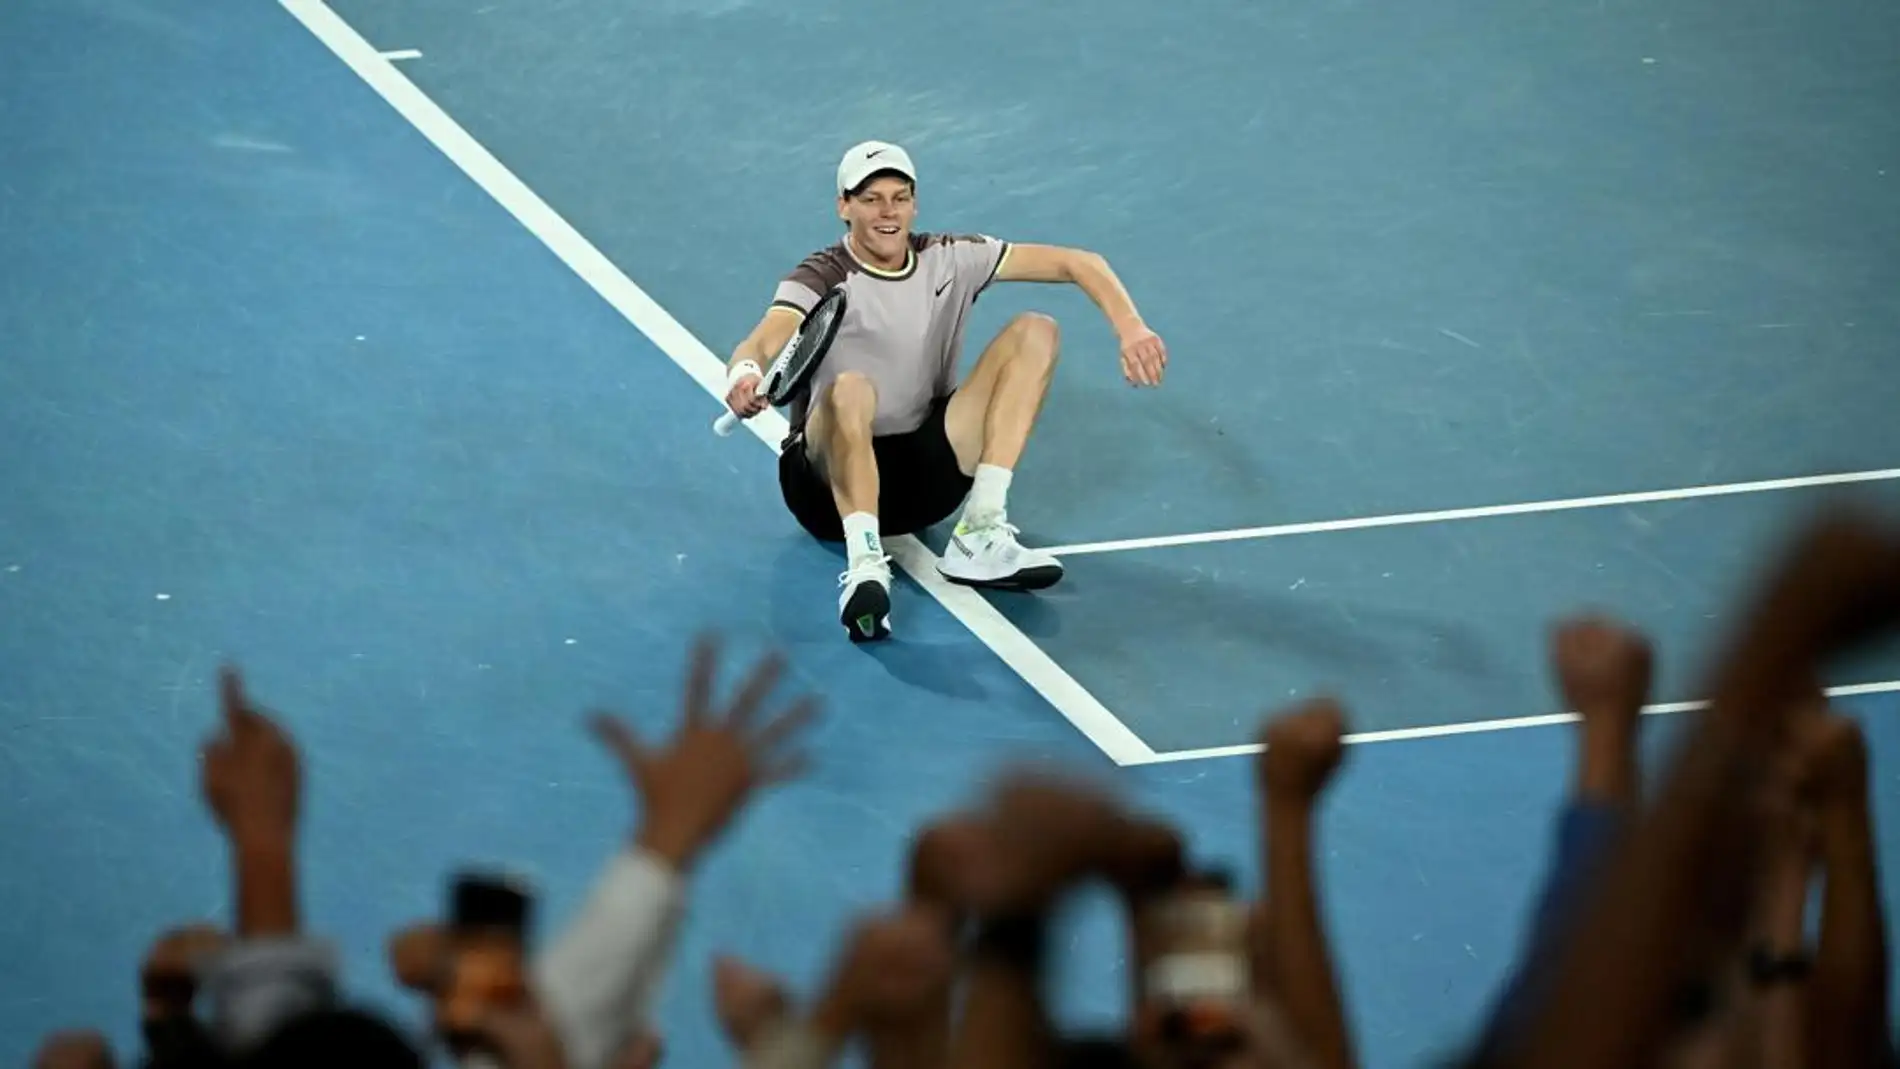 Sinner gana el Open de Australia al remontar a Medvedev en primera final de Grand Slam